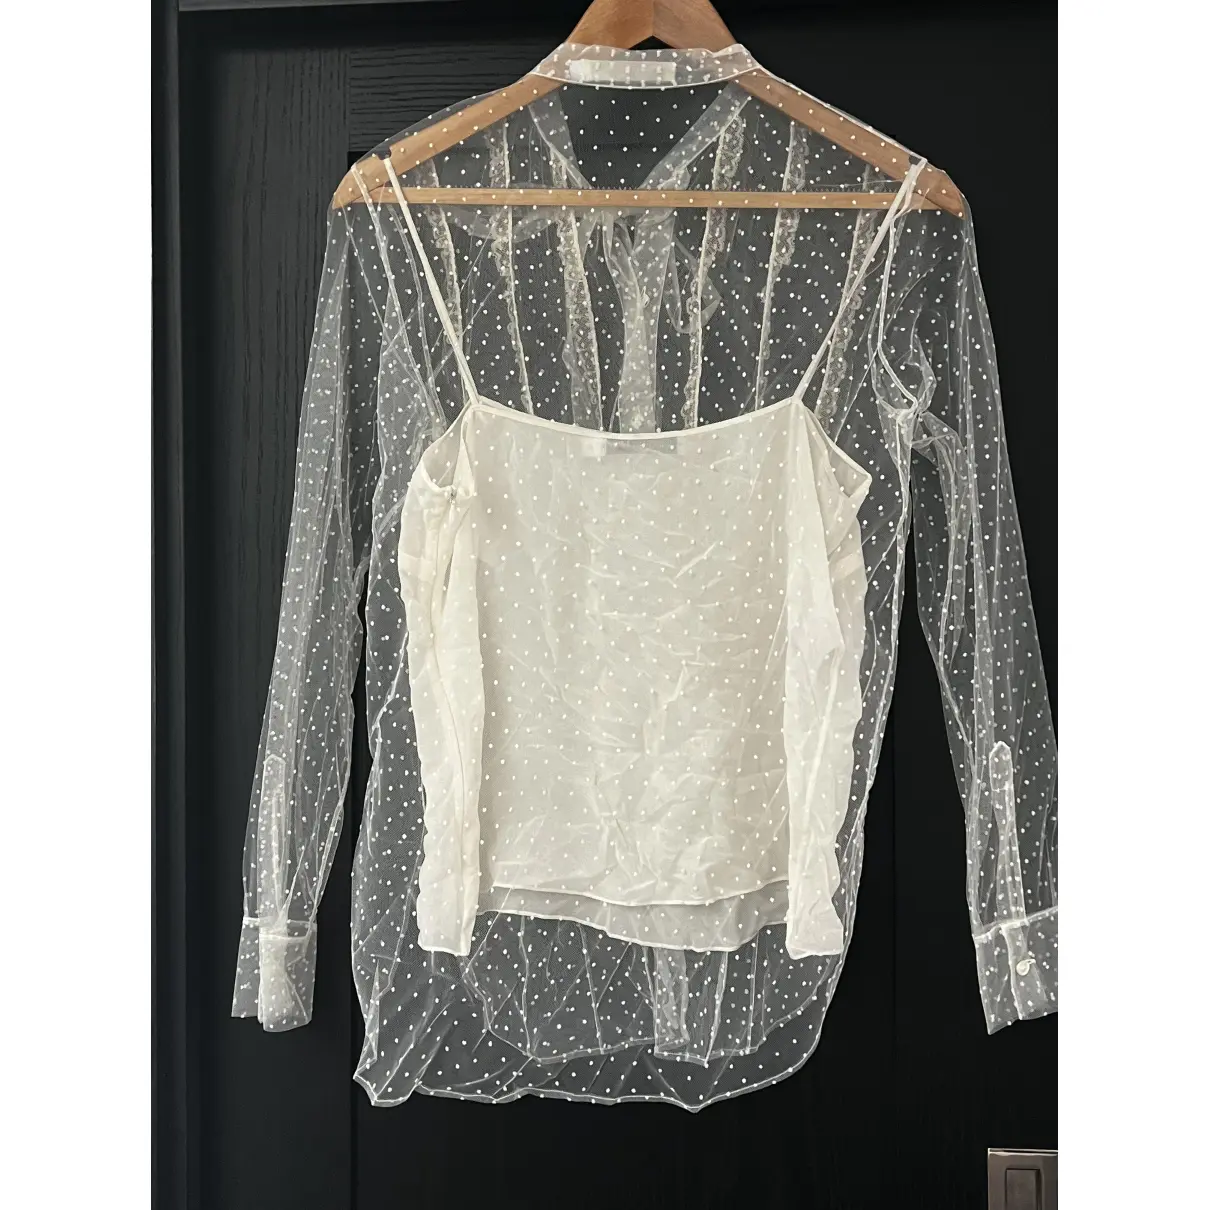 Buy Dior Lace blouse online